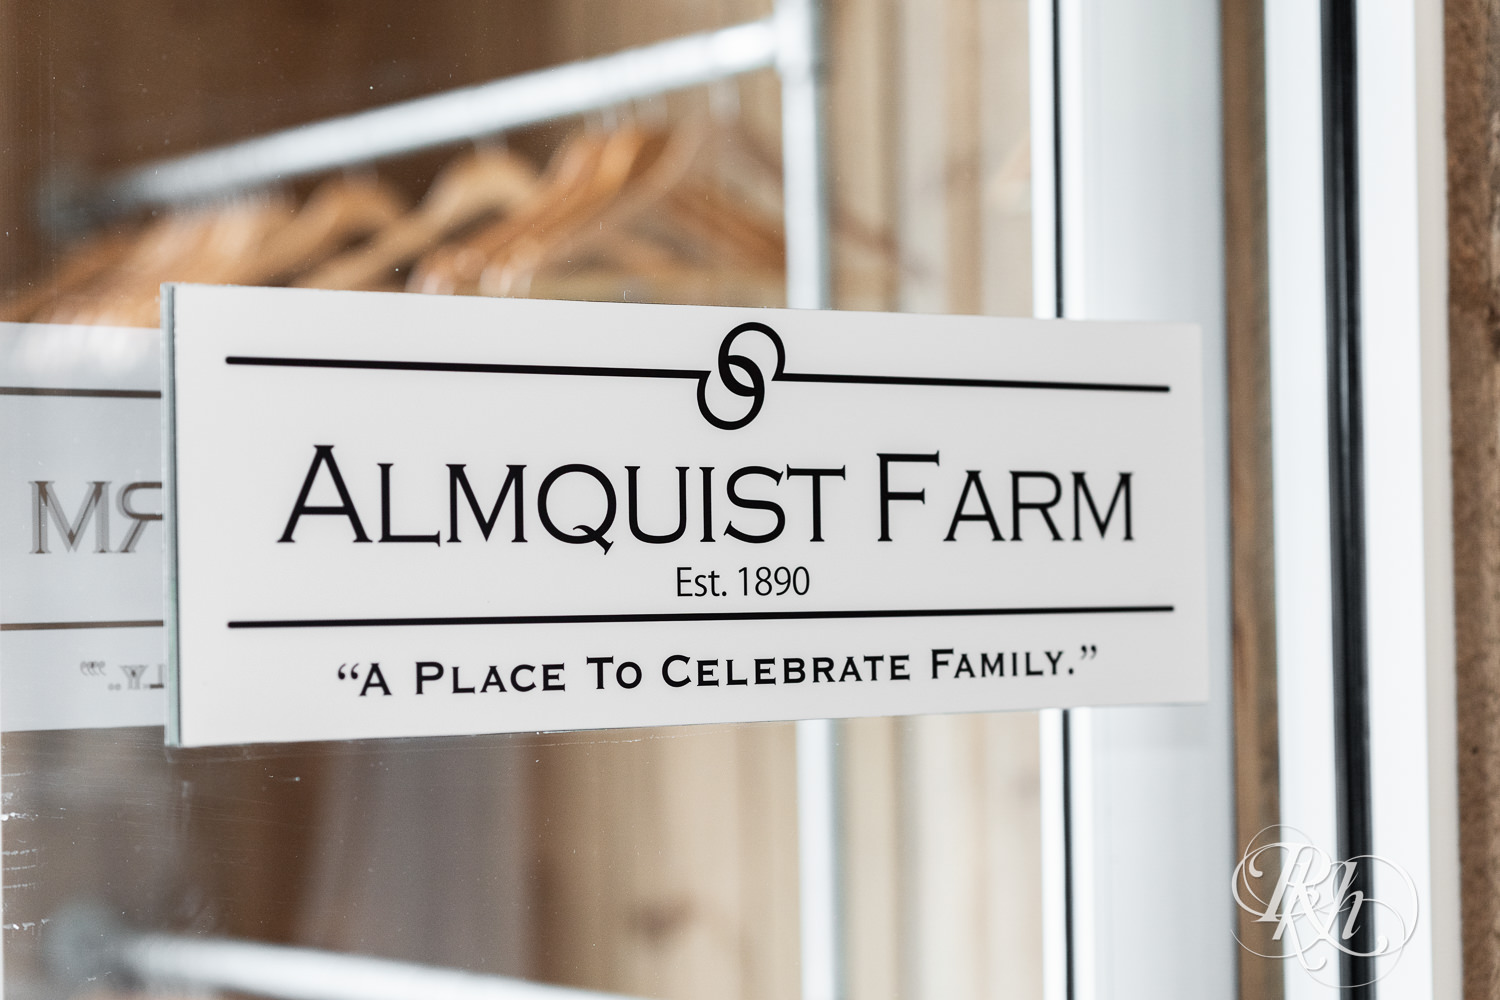 Almquist Farm sign in Hastings, Minnesota.